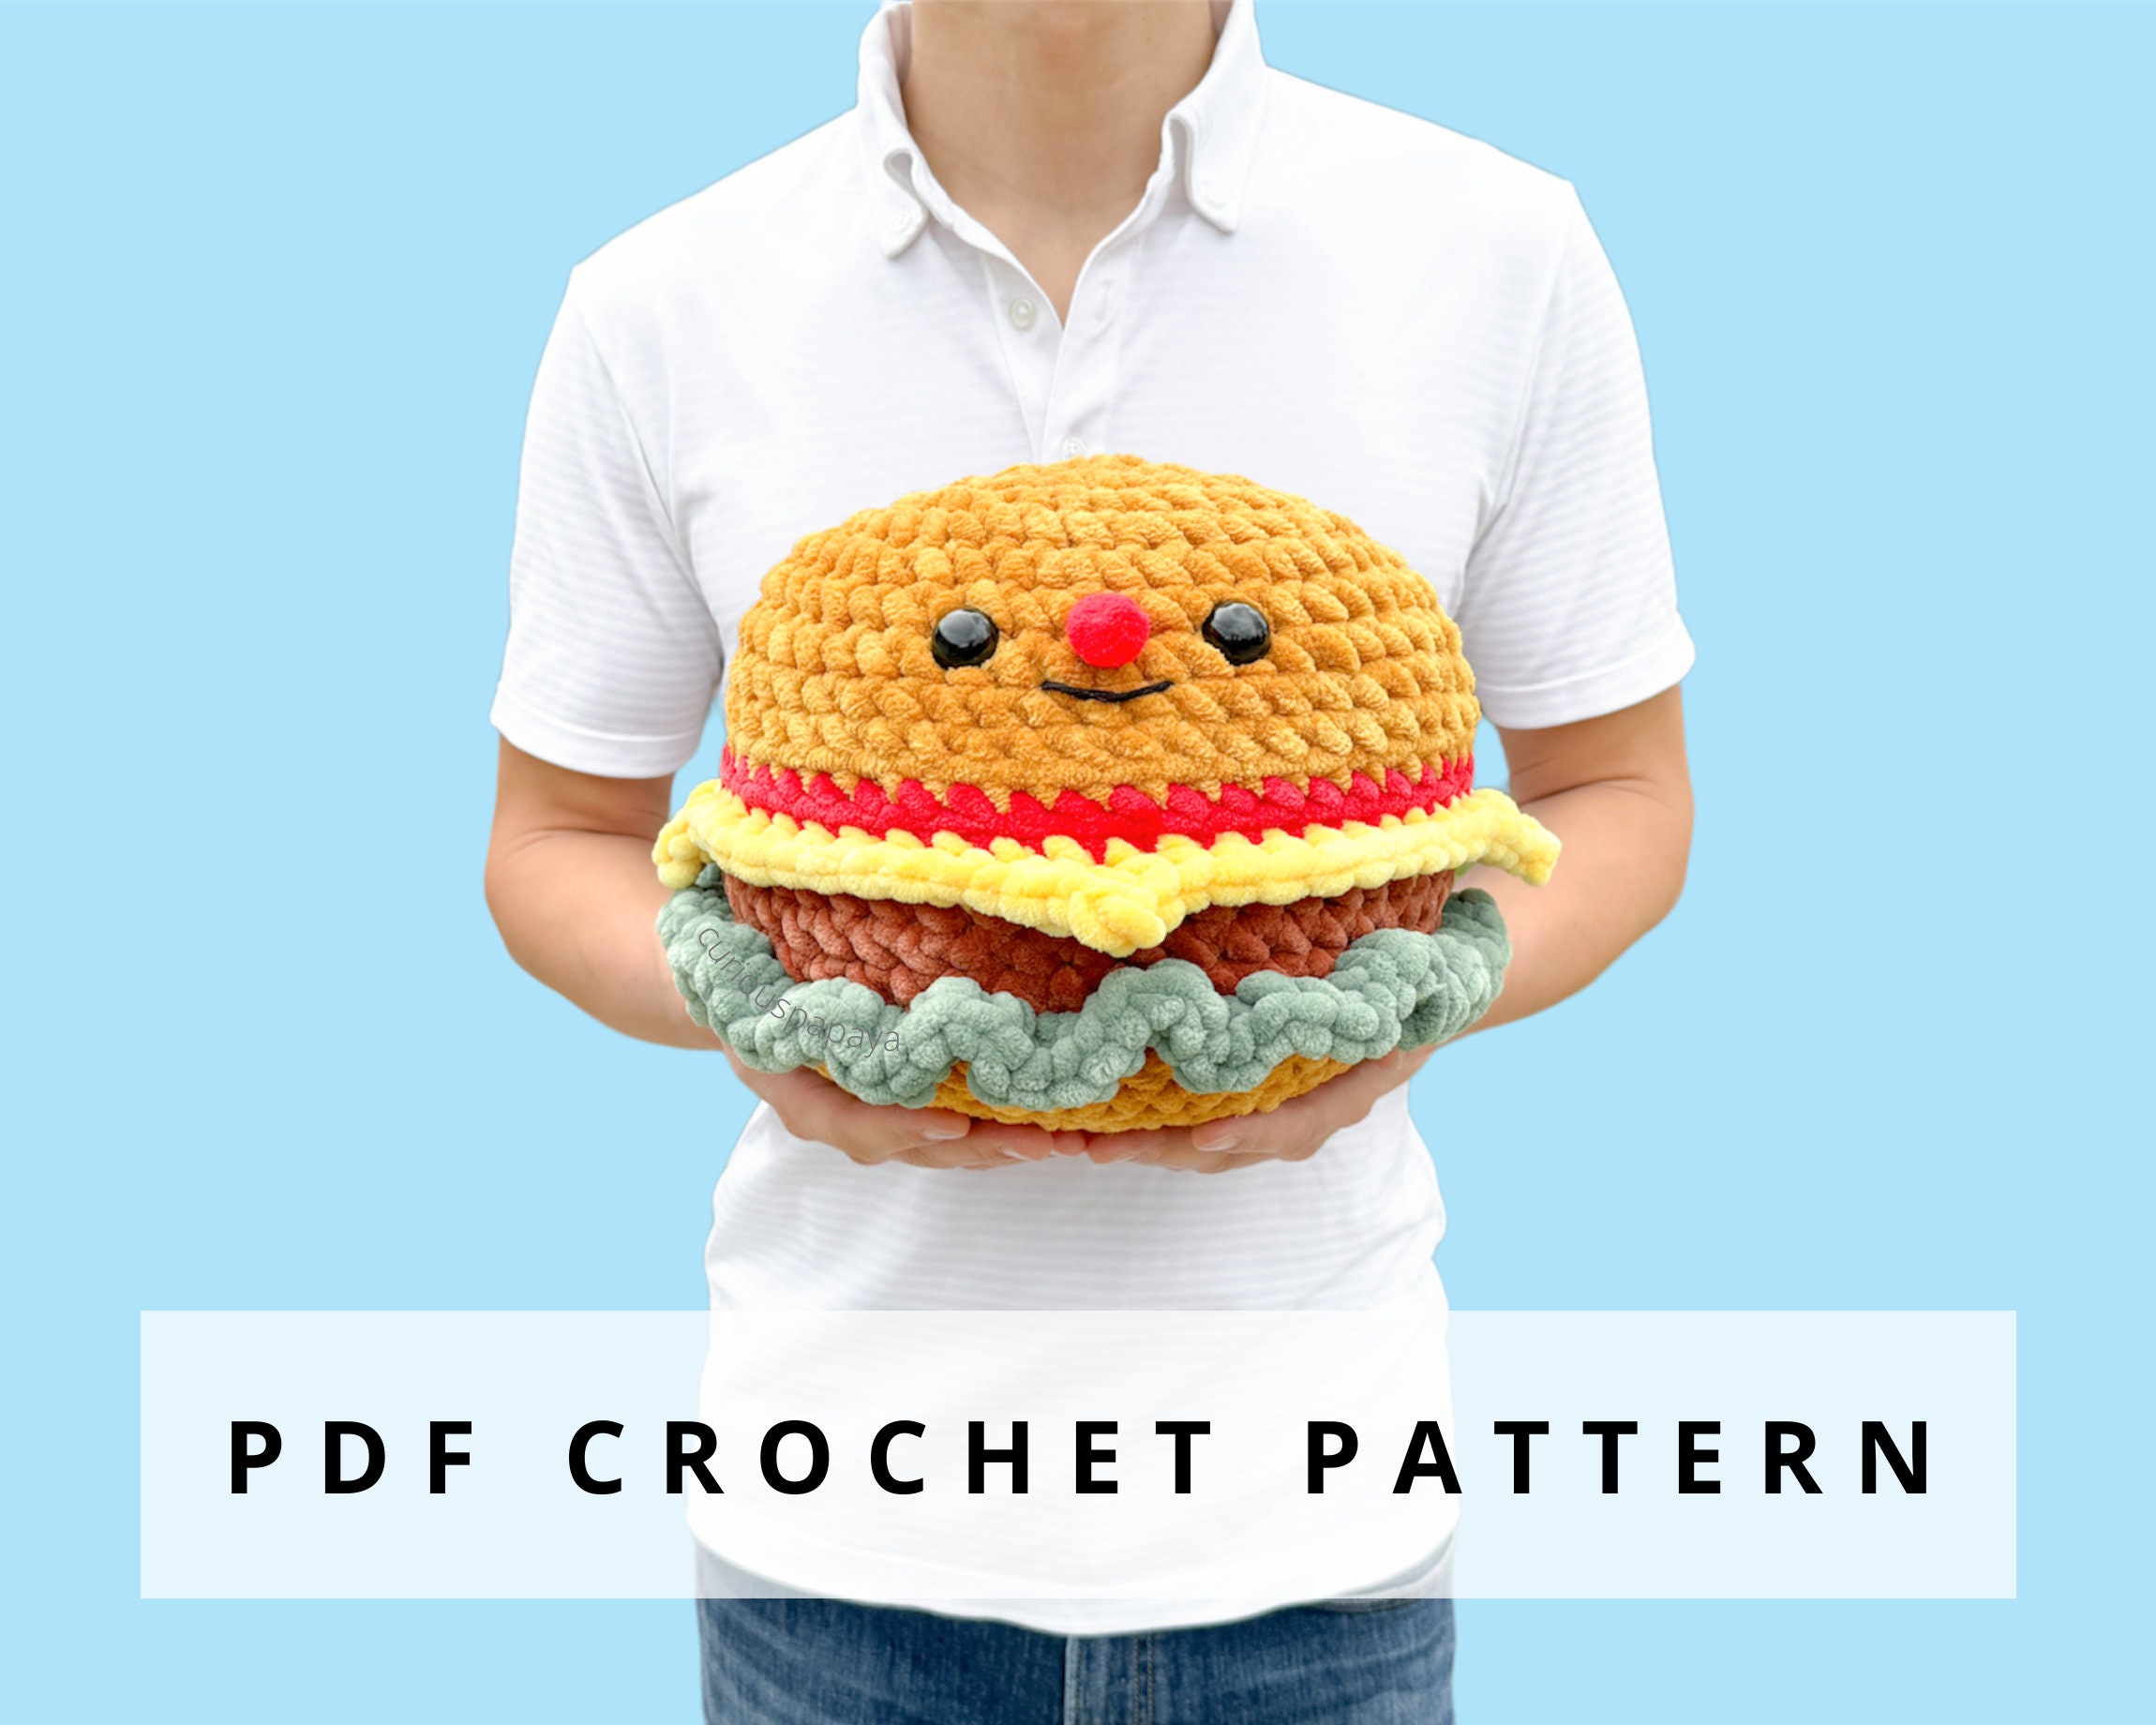 PATTERN PACK: Crochet Emotional Support Worm, Pickle, Potato, Donut 